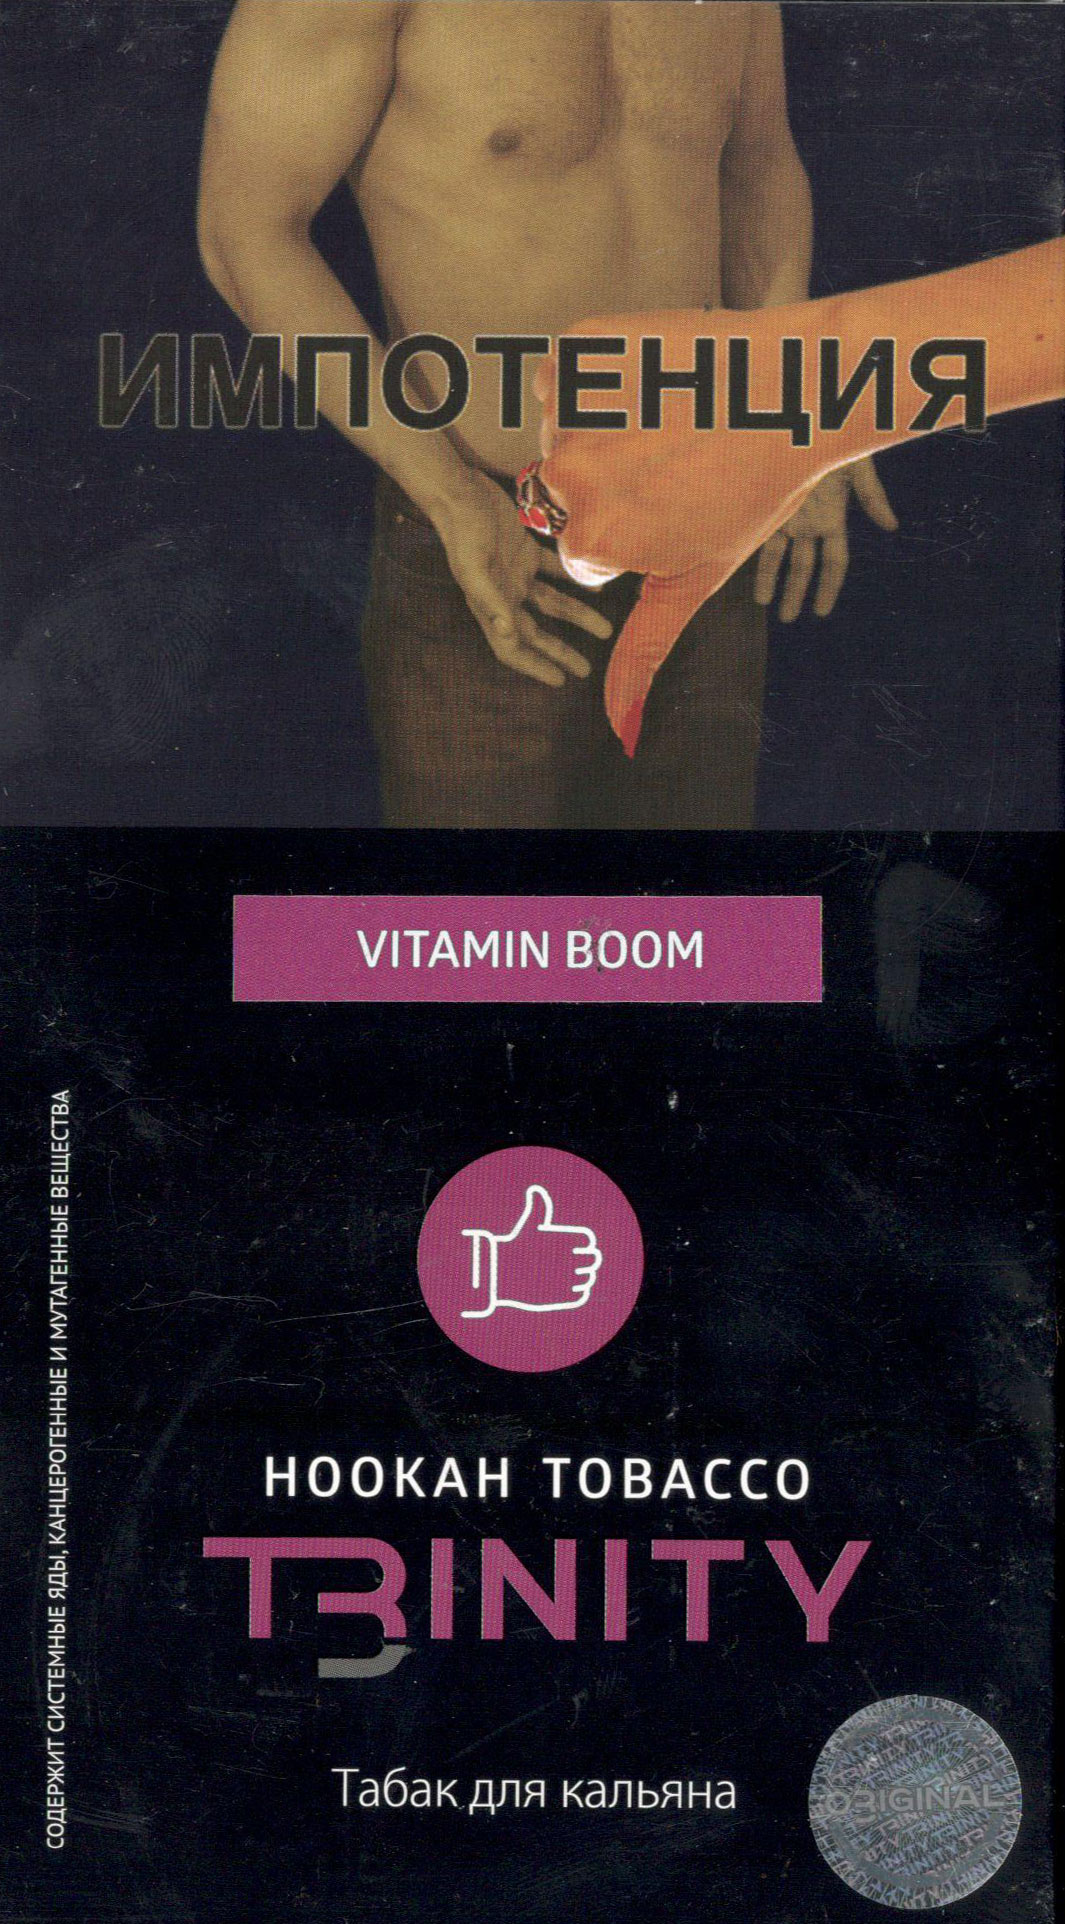 Купить табак Trinity - Витаминный Бум (vitamin boom) 100 гр фото